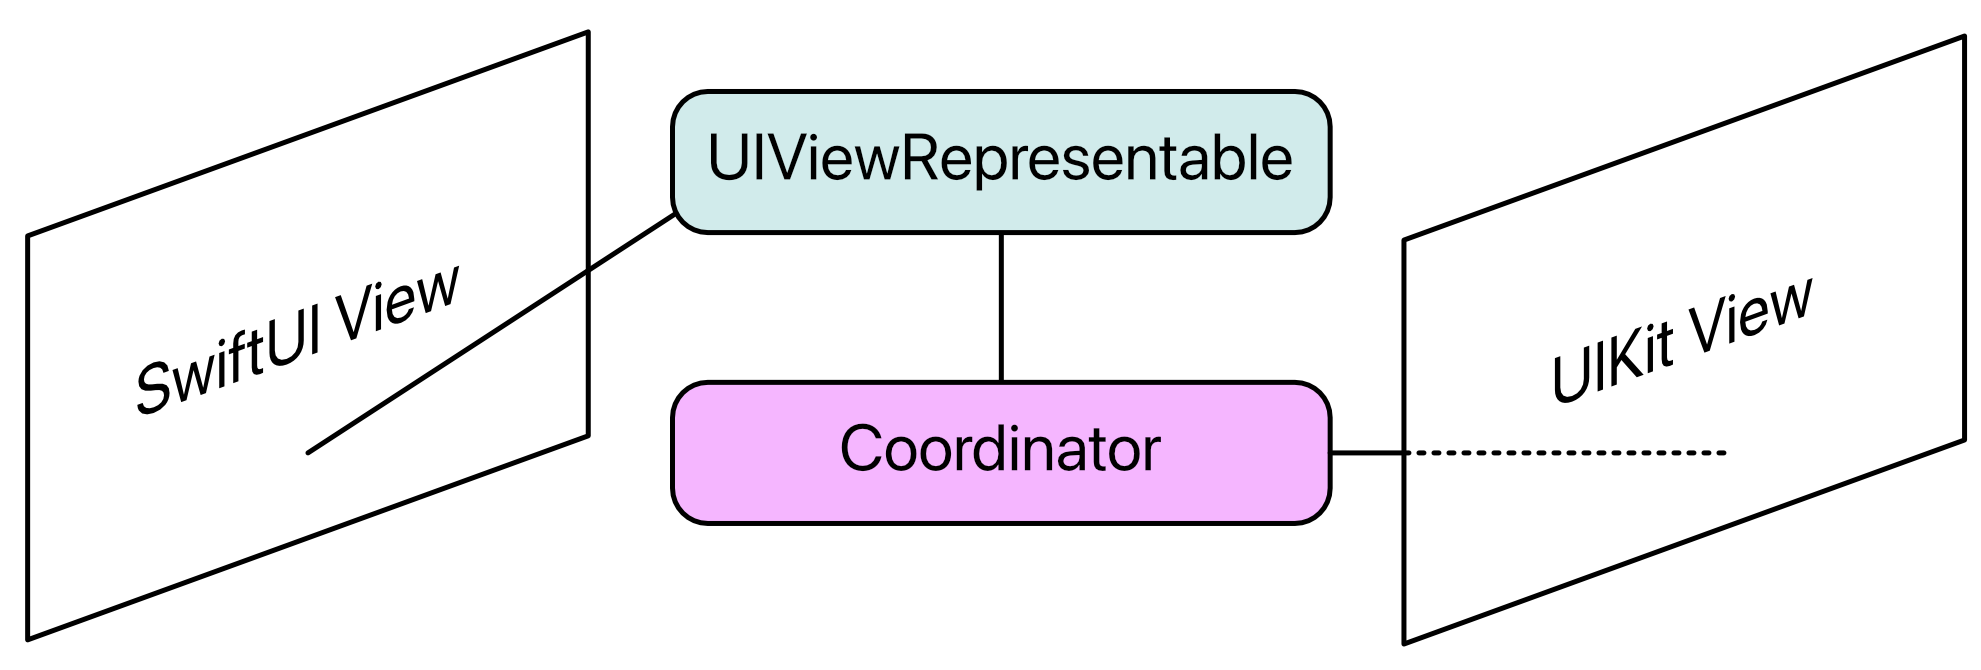 UIViewRepresentable and Coordinator